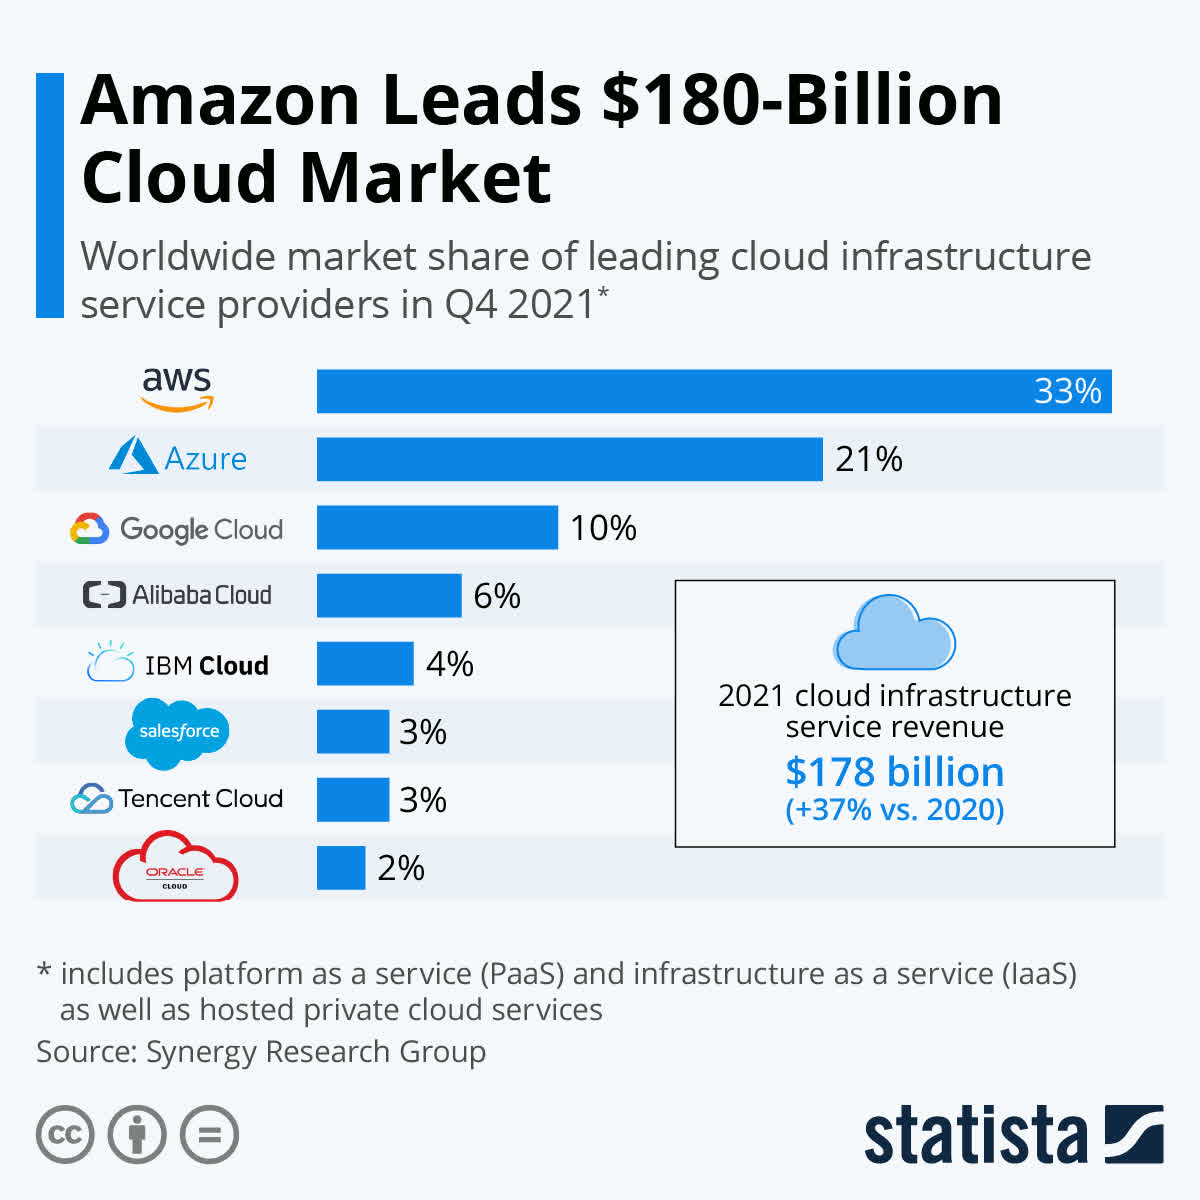 Amazon Leads $180-Billion Cloud Market